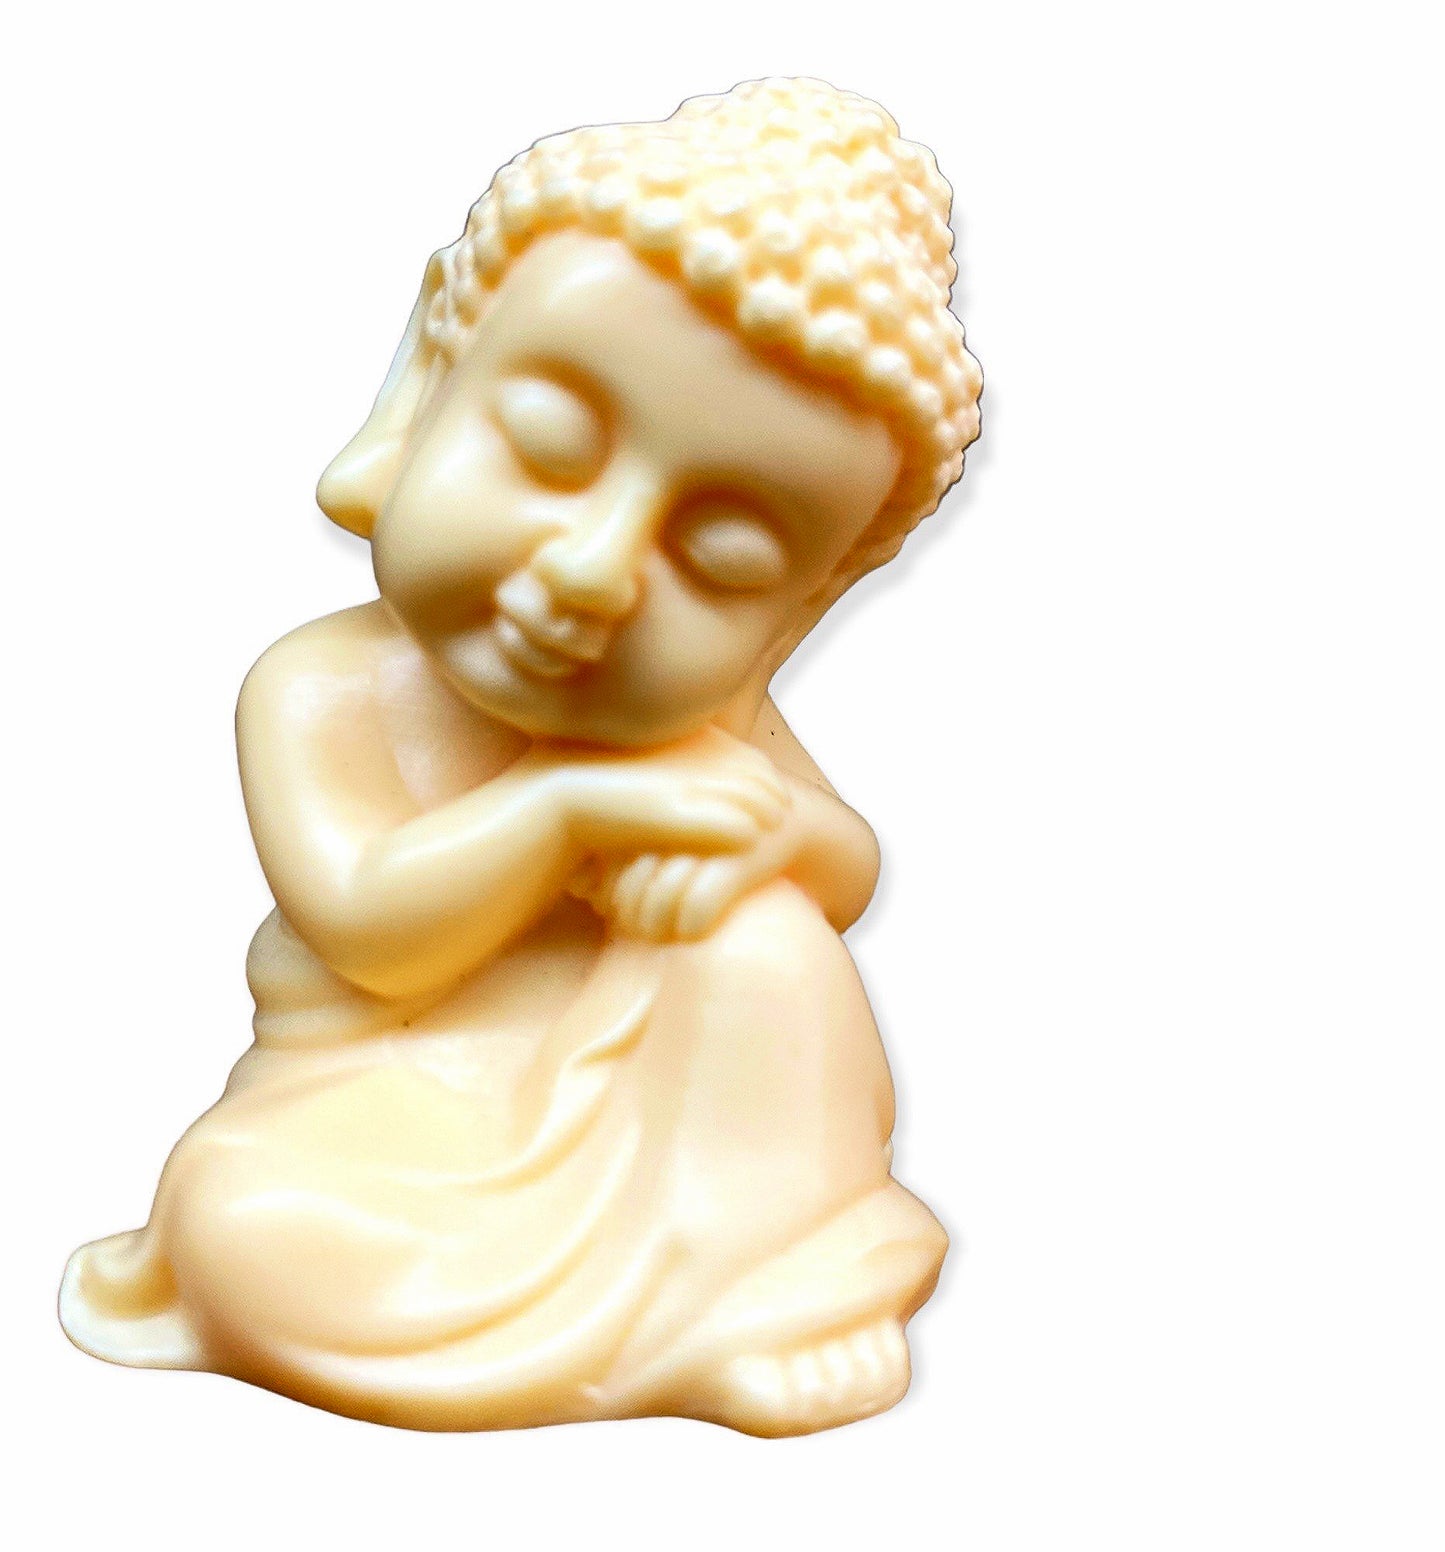 Sleeping Sitting Buddha Carved of Ivory Nut - 2.5 inch - 6.5cm - China - NEW1022